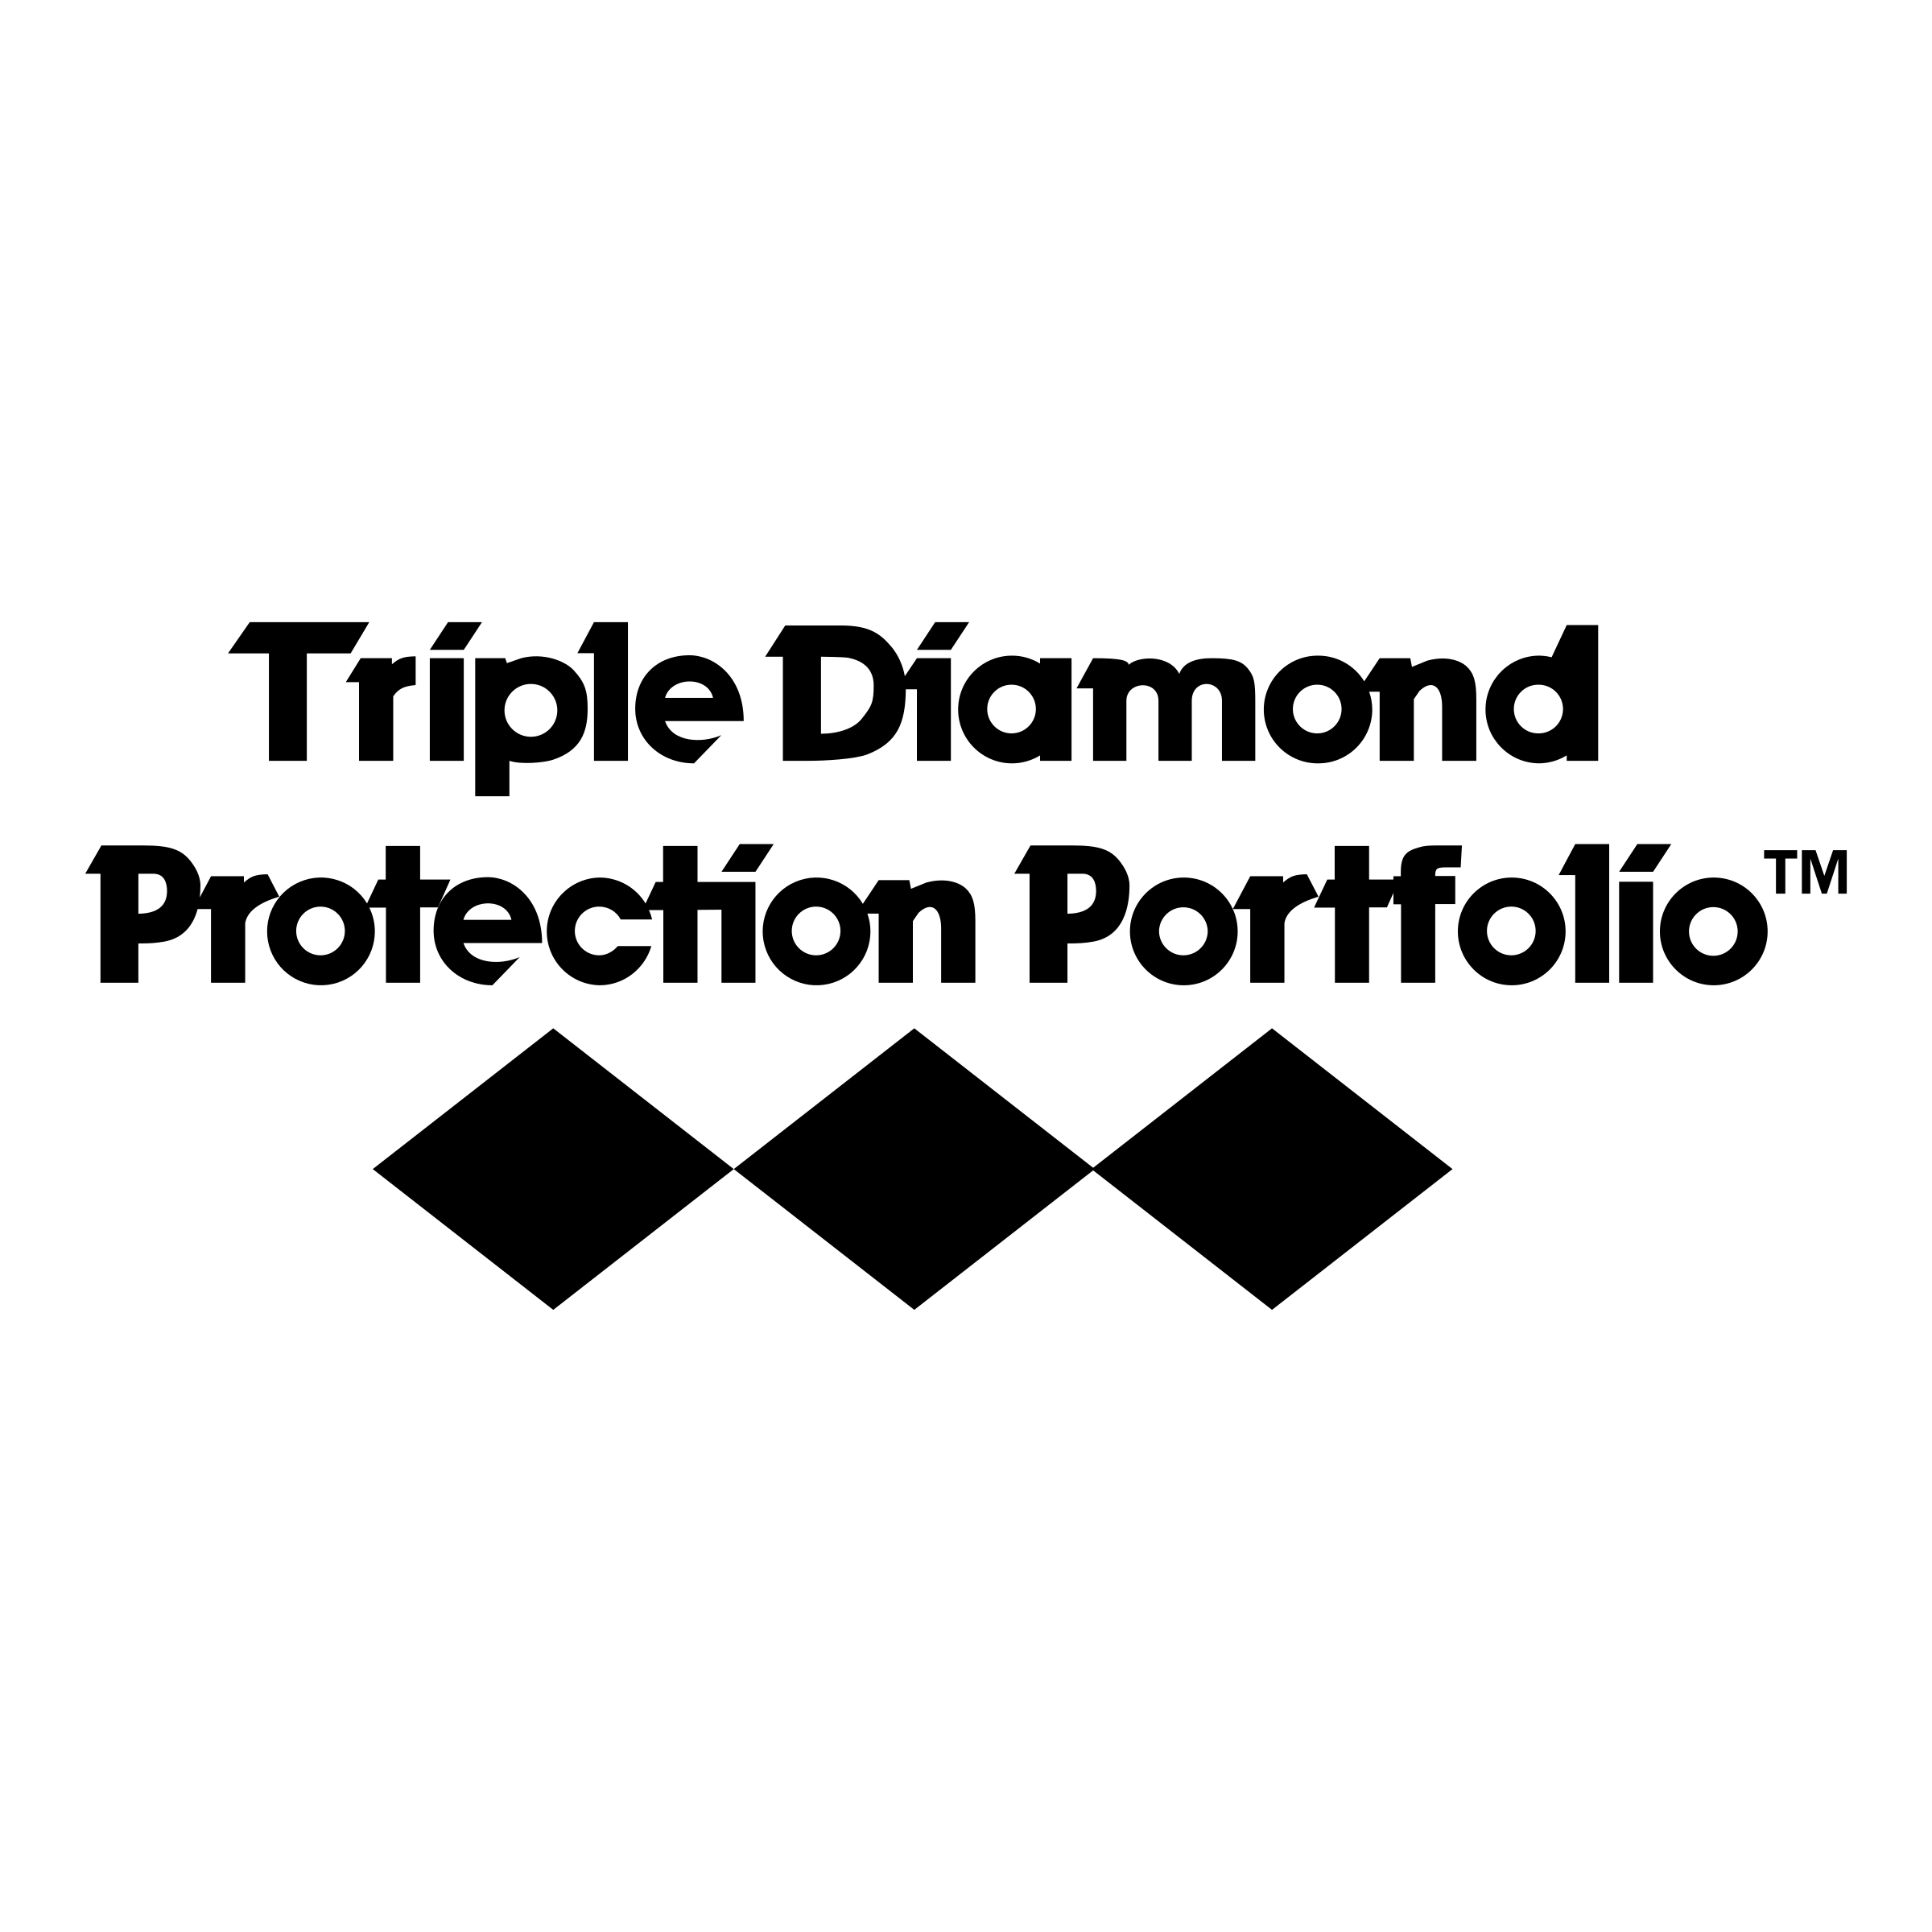 Triple Diamond Logo - Triple Diamond Protection Portfolio Logo PNG Transparent & SVG ...